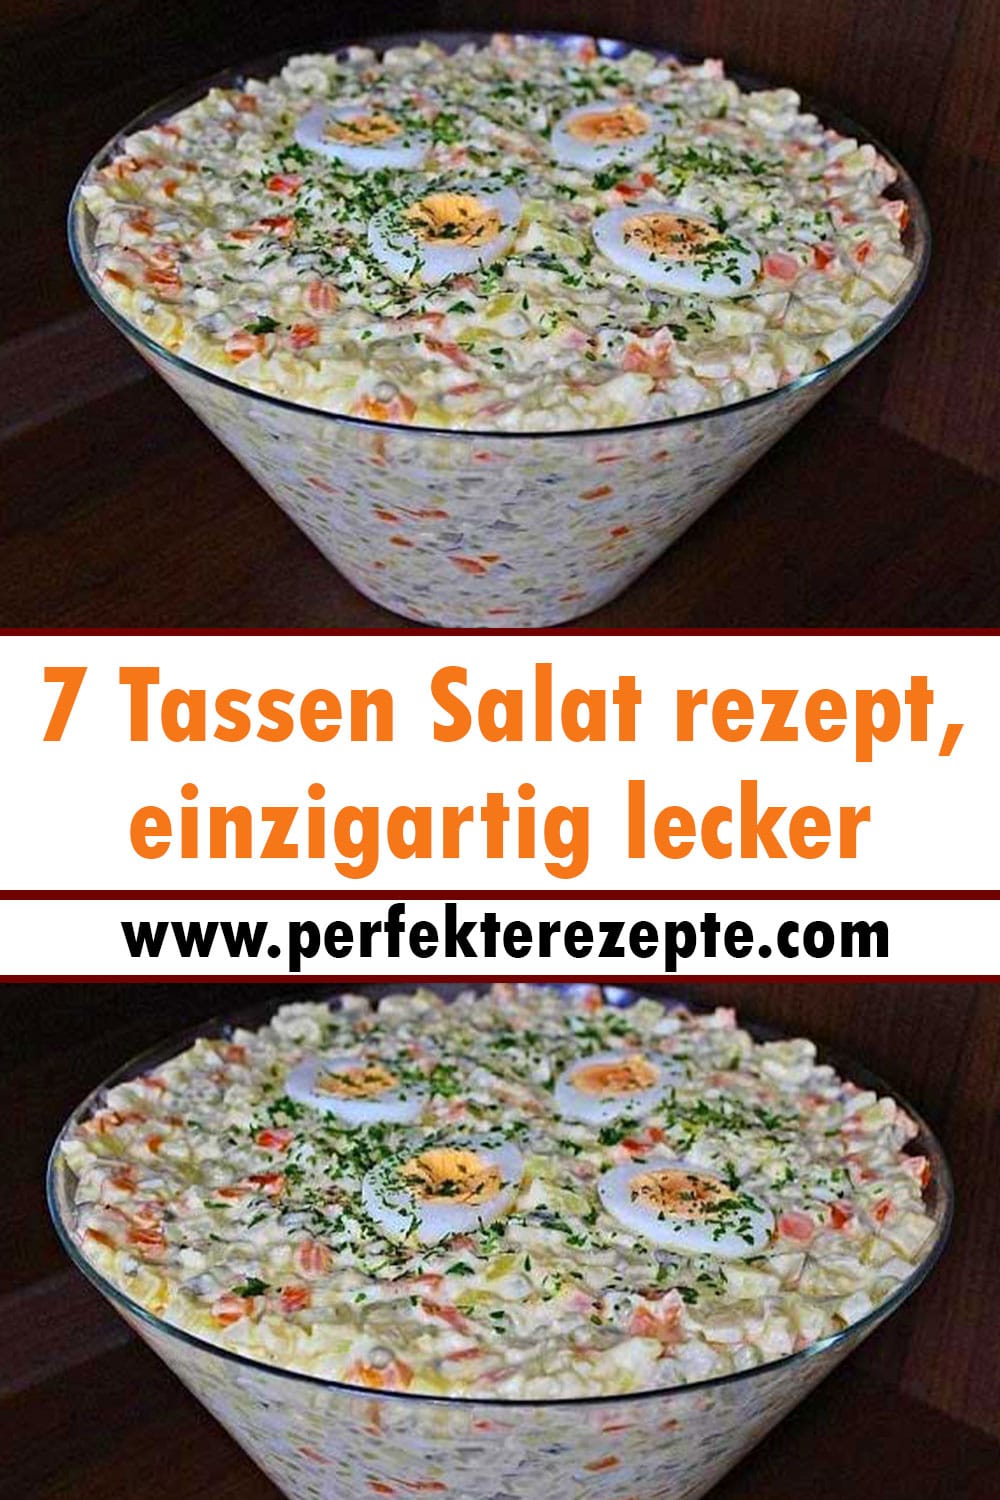 7 Tassen Salat rezept, einzigartig lecker